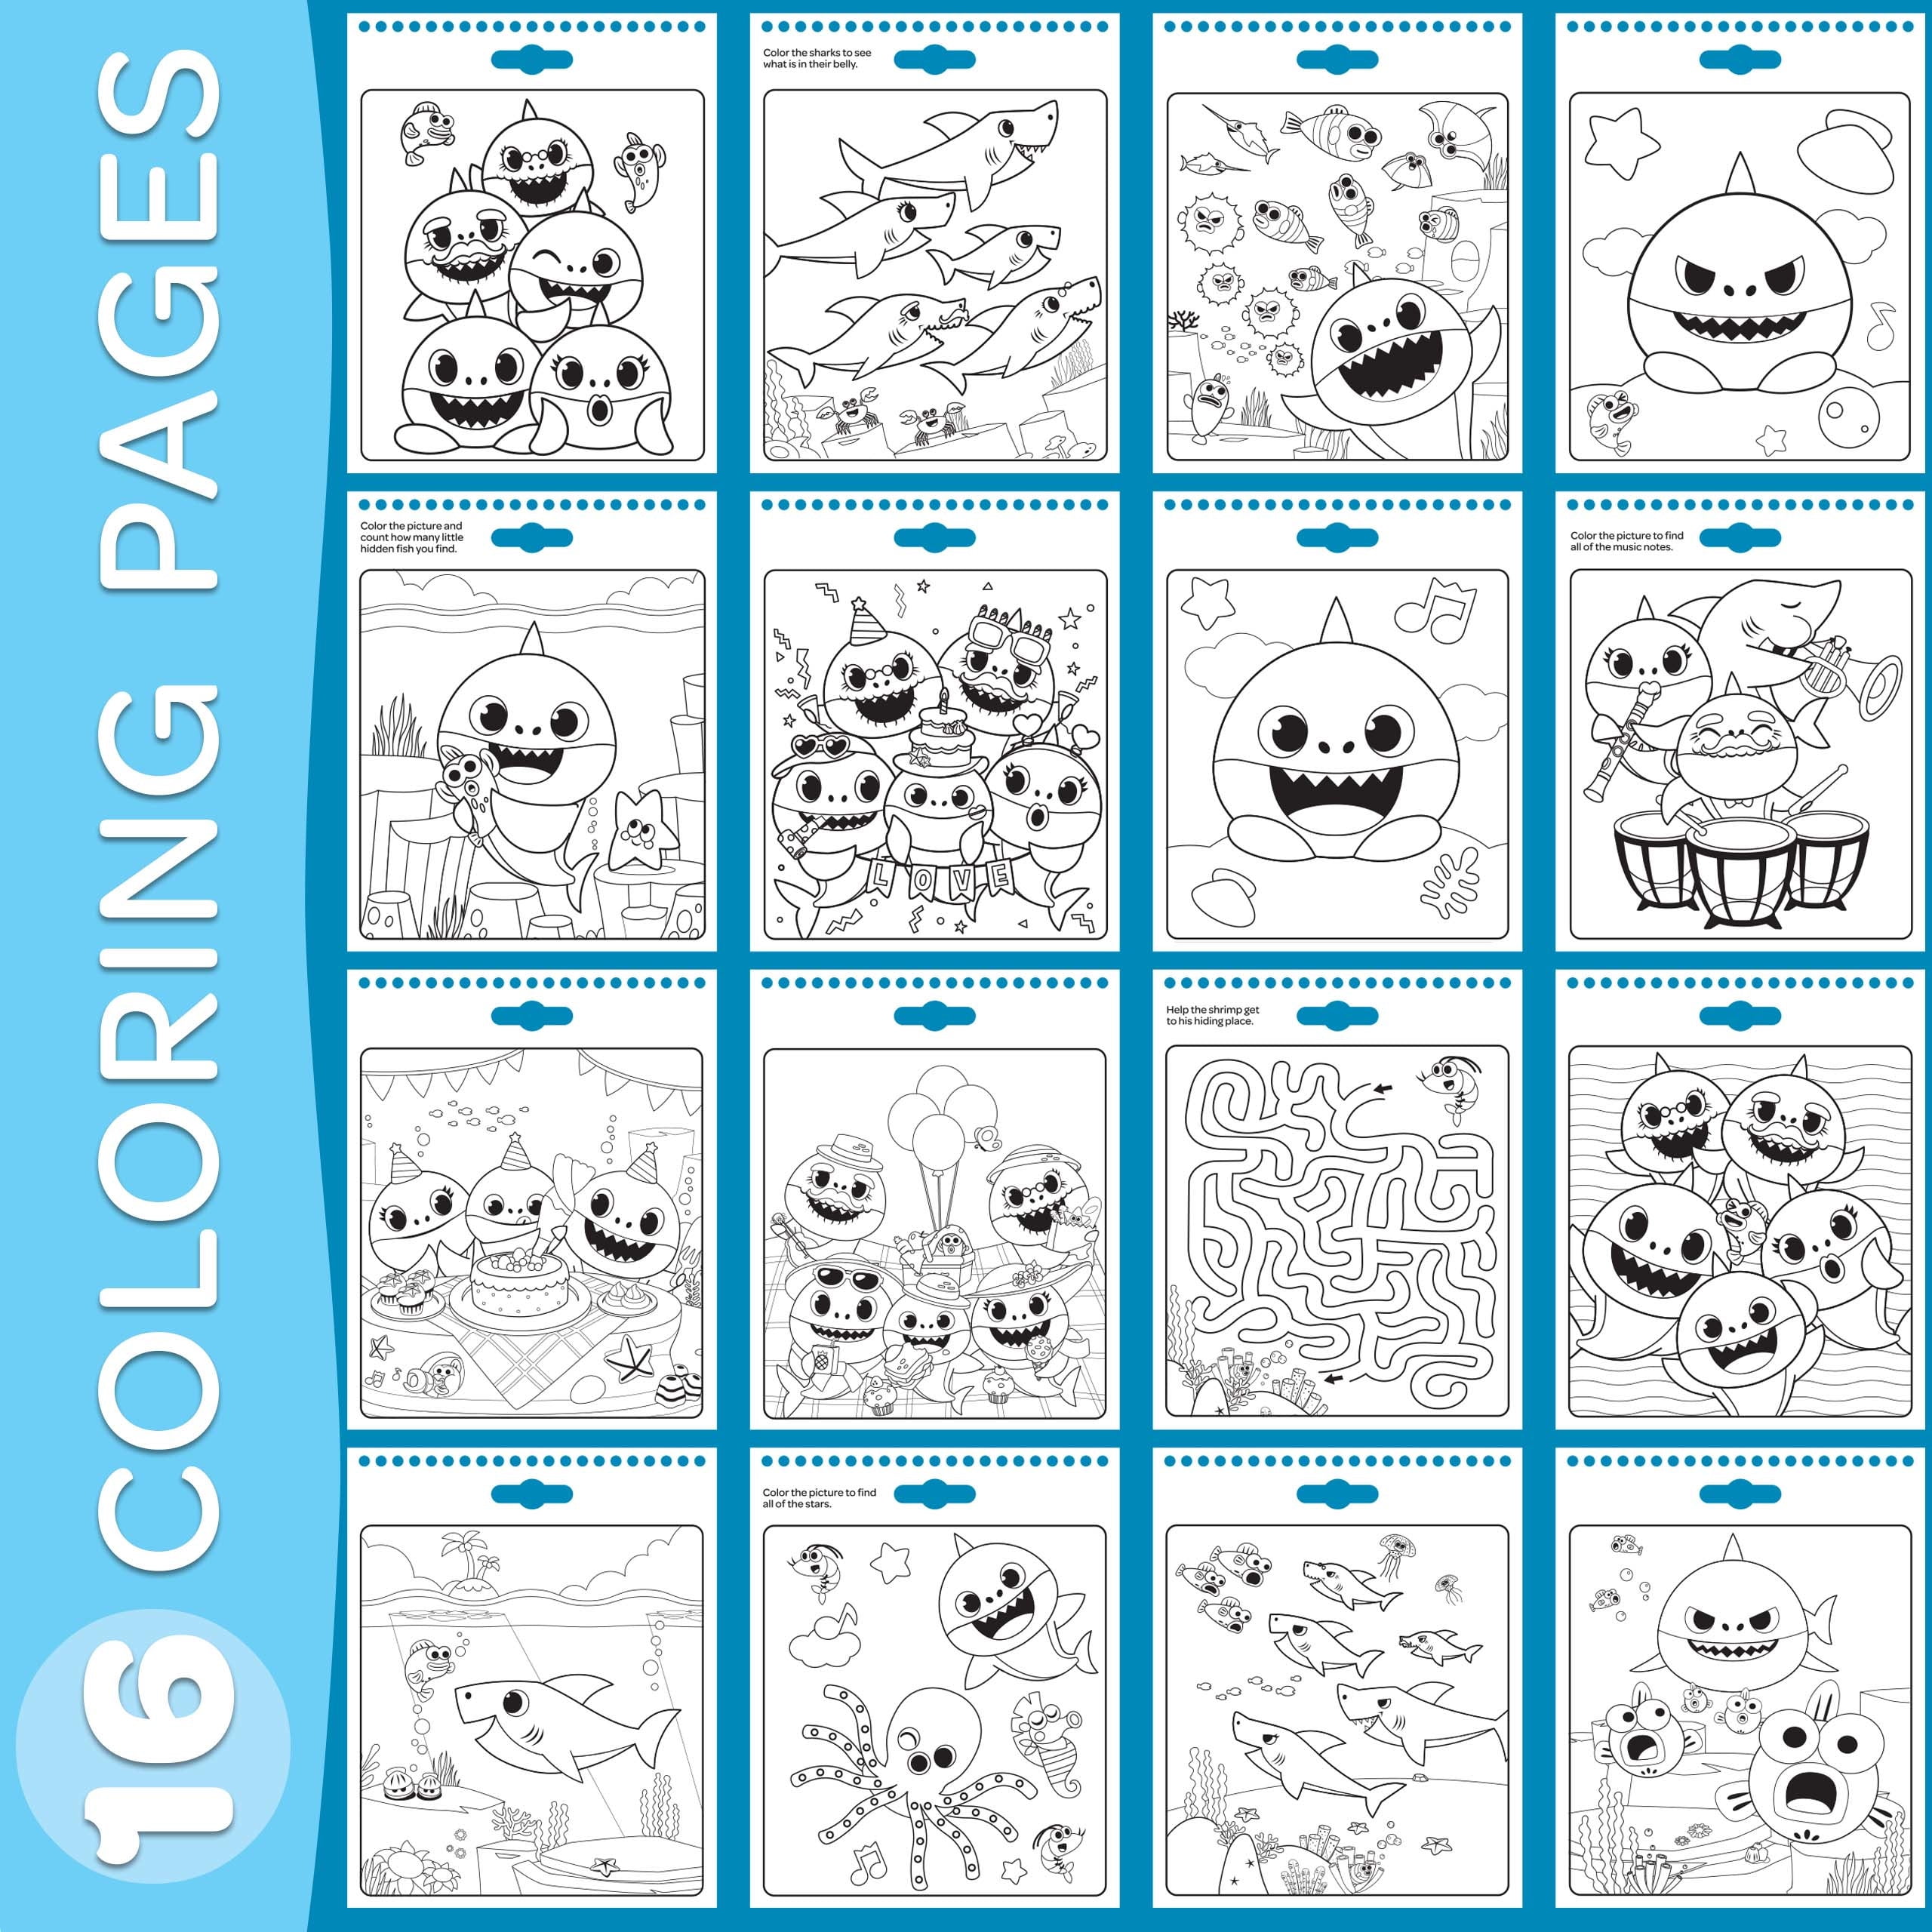 Crayola Color Wonder Coloring Pad & Markers-Baby Shark 75-7103 - GettyCrafts